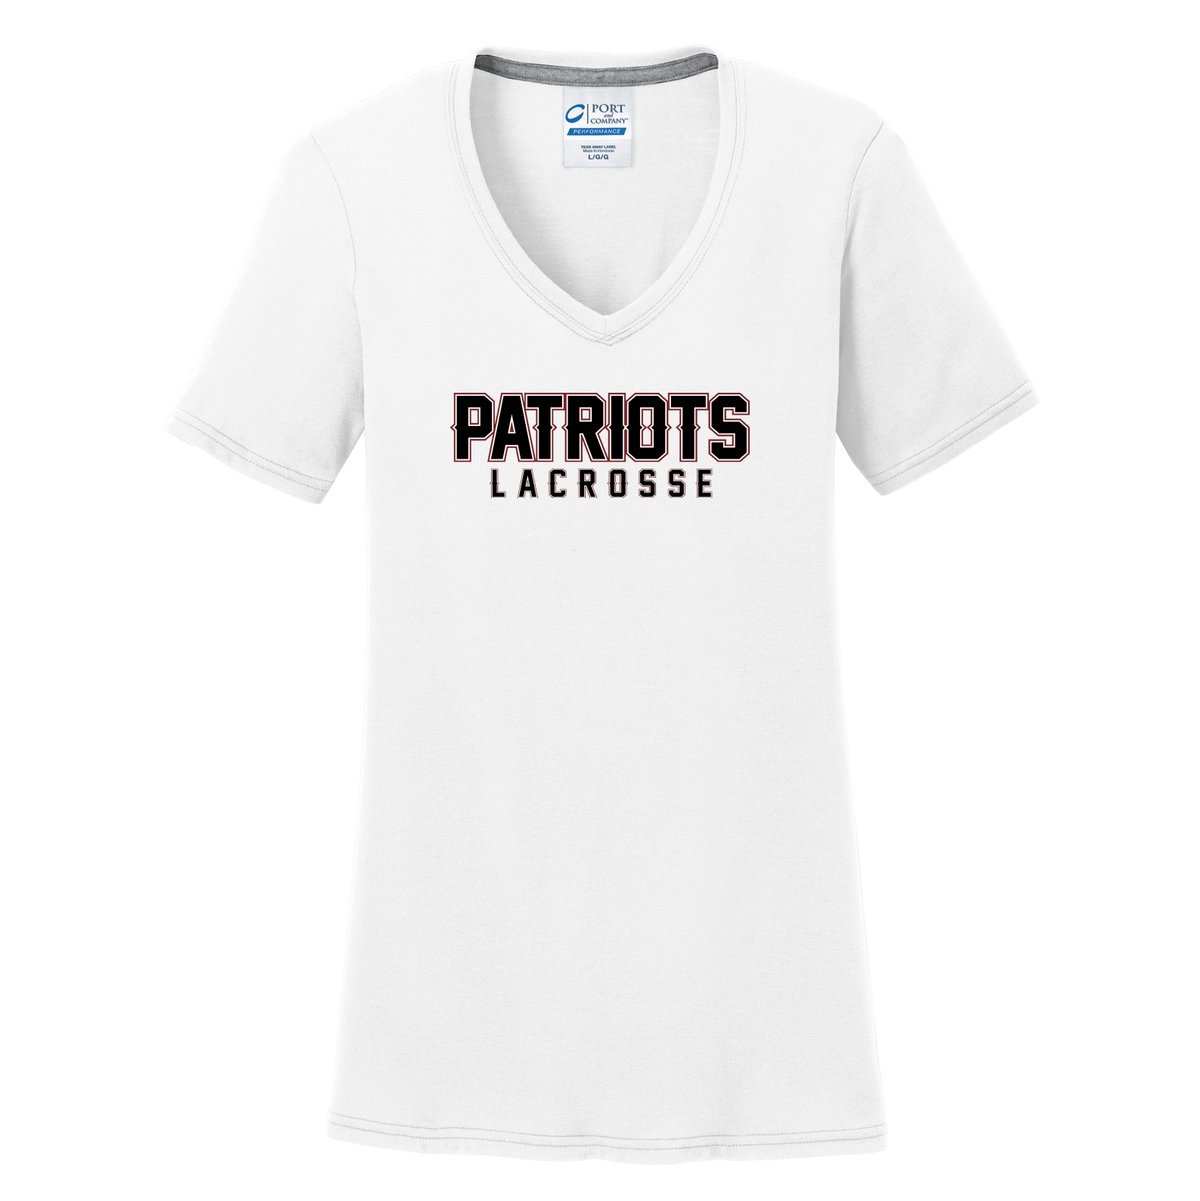 George Washington Lacrosse Women's T-Shirt